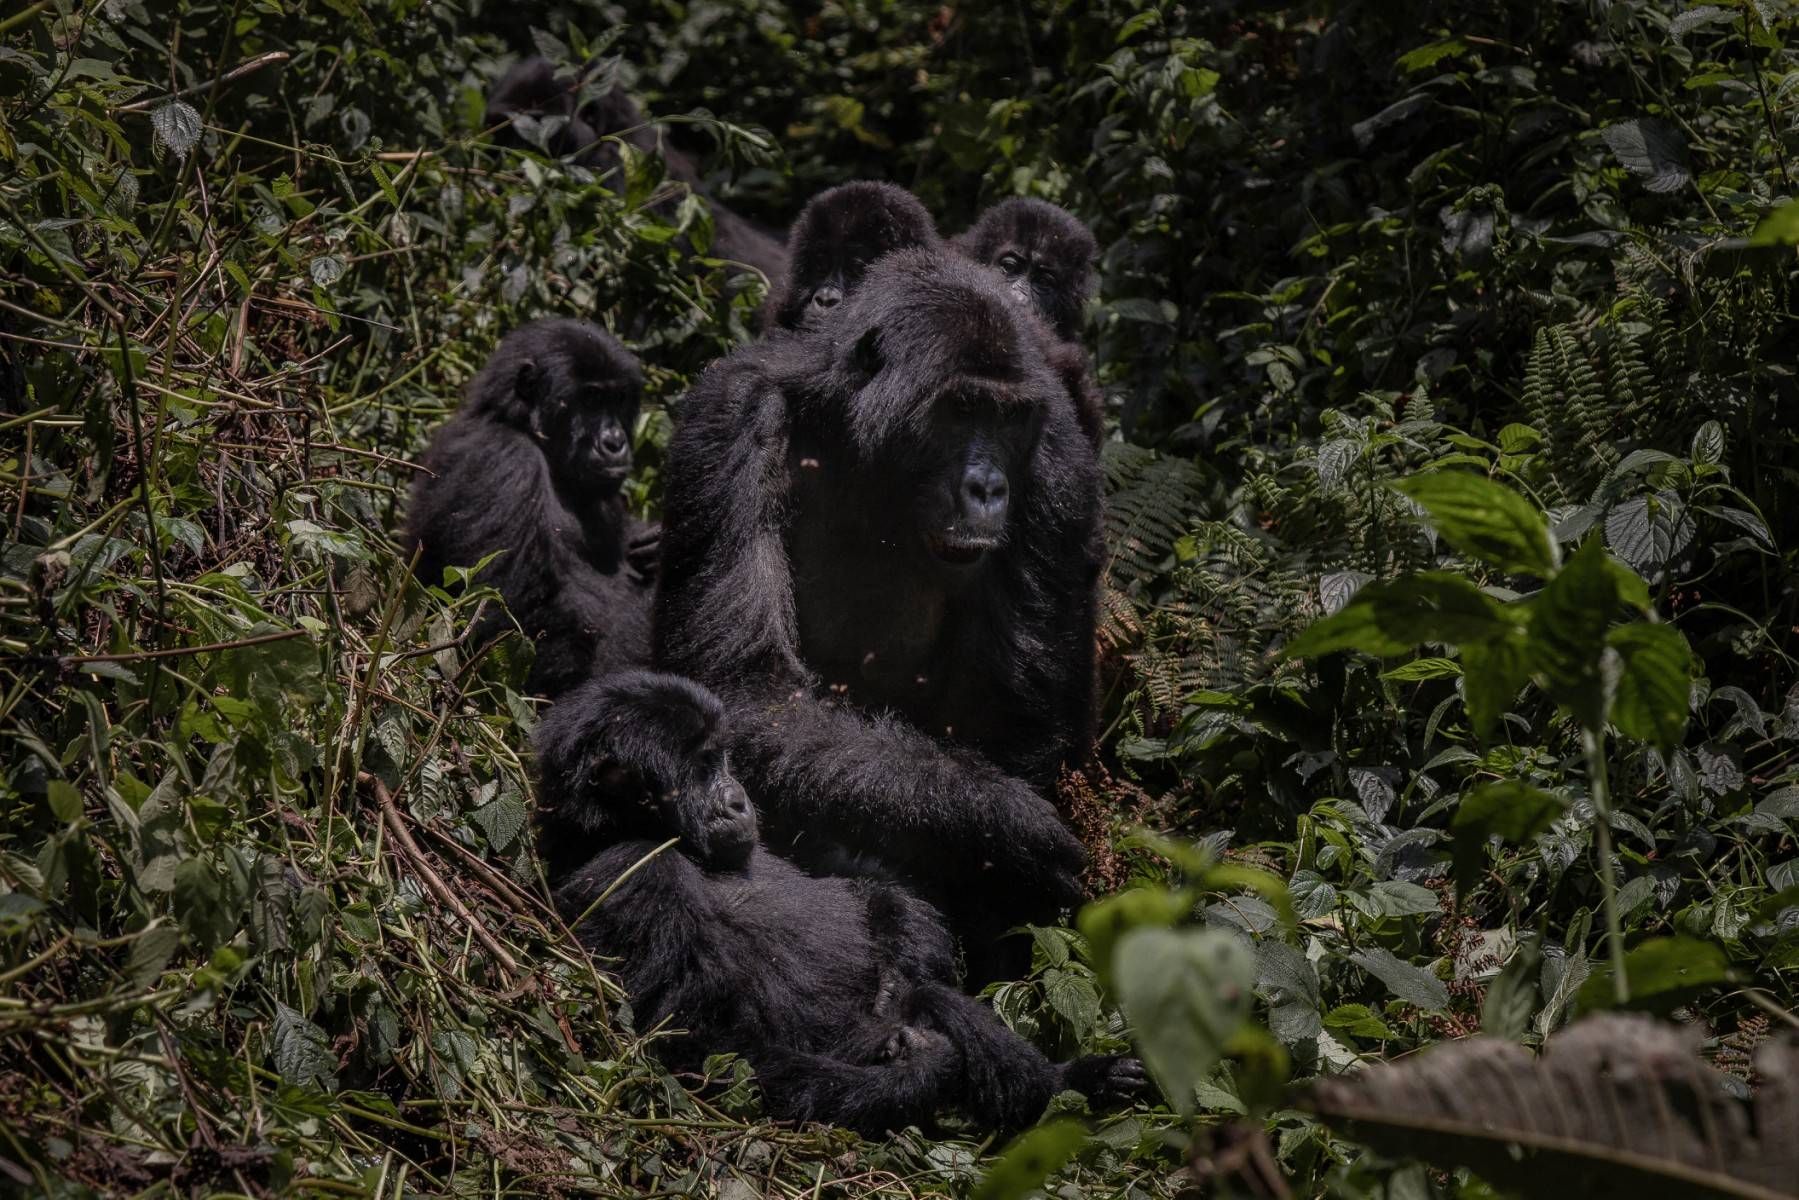 Deforestation endangers rare gorillas in DRCongo park: campaigners